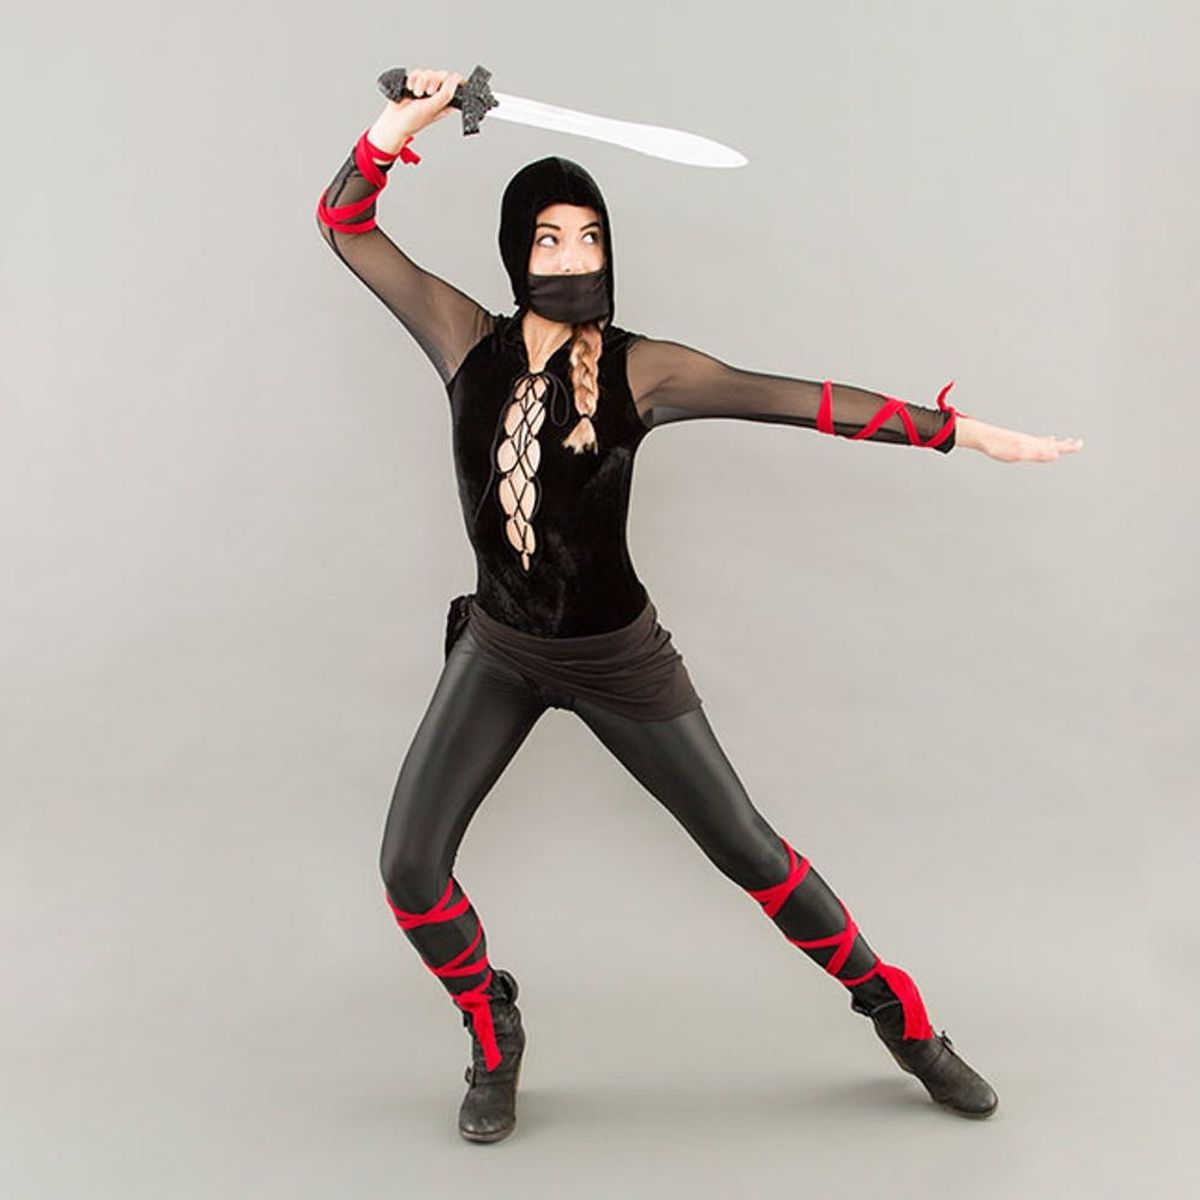 How to Make a Last-Minute Ninja Halloween Costume